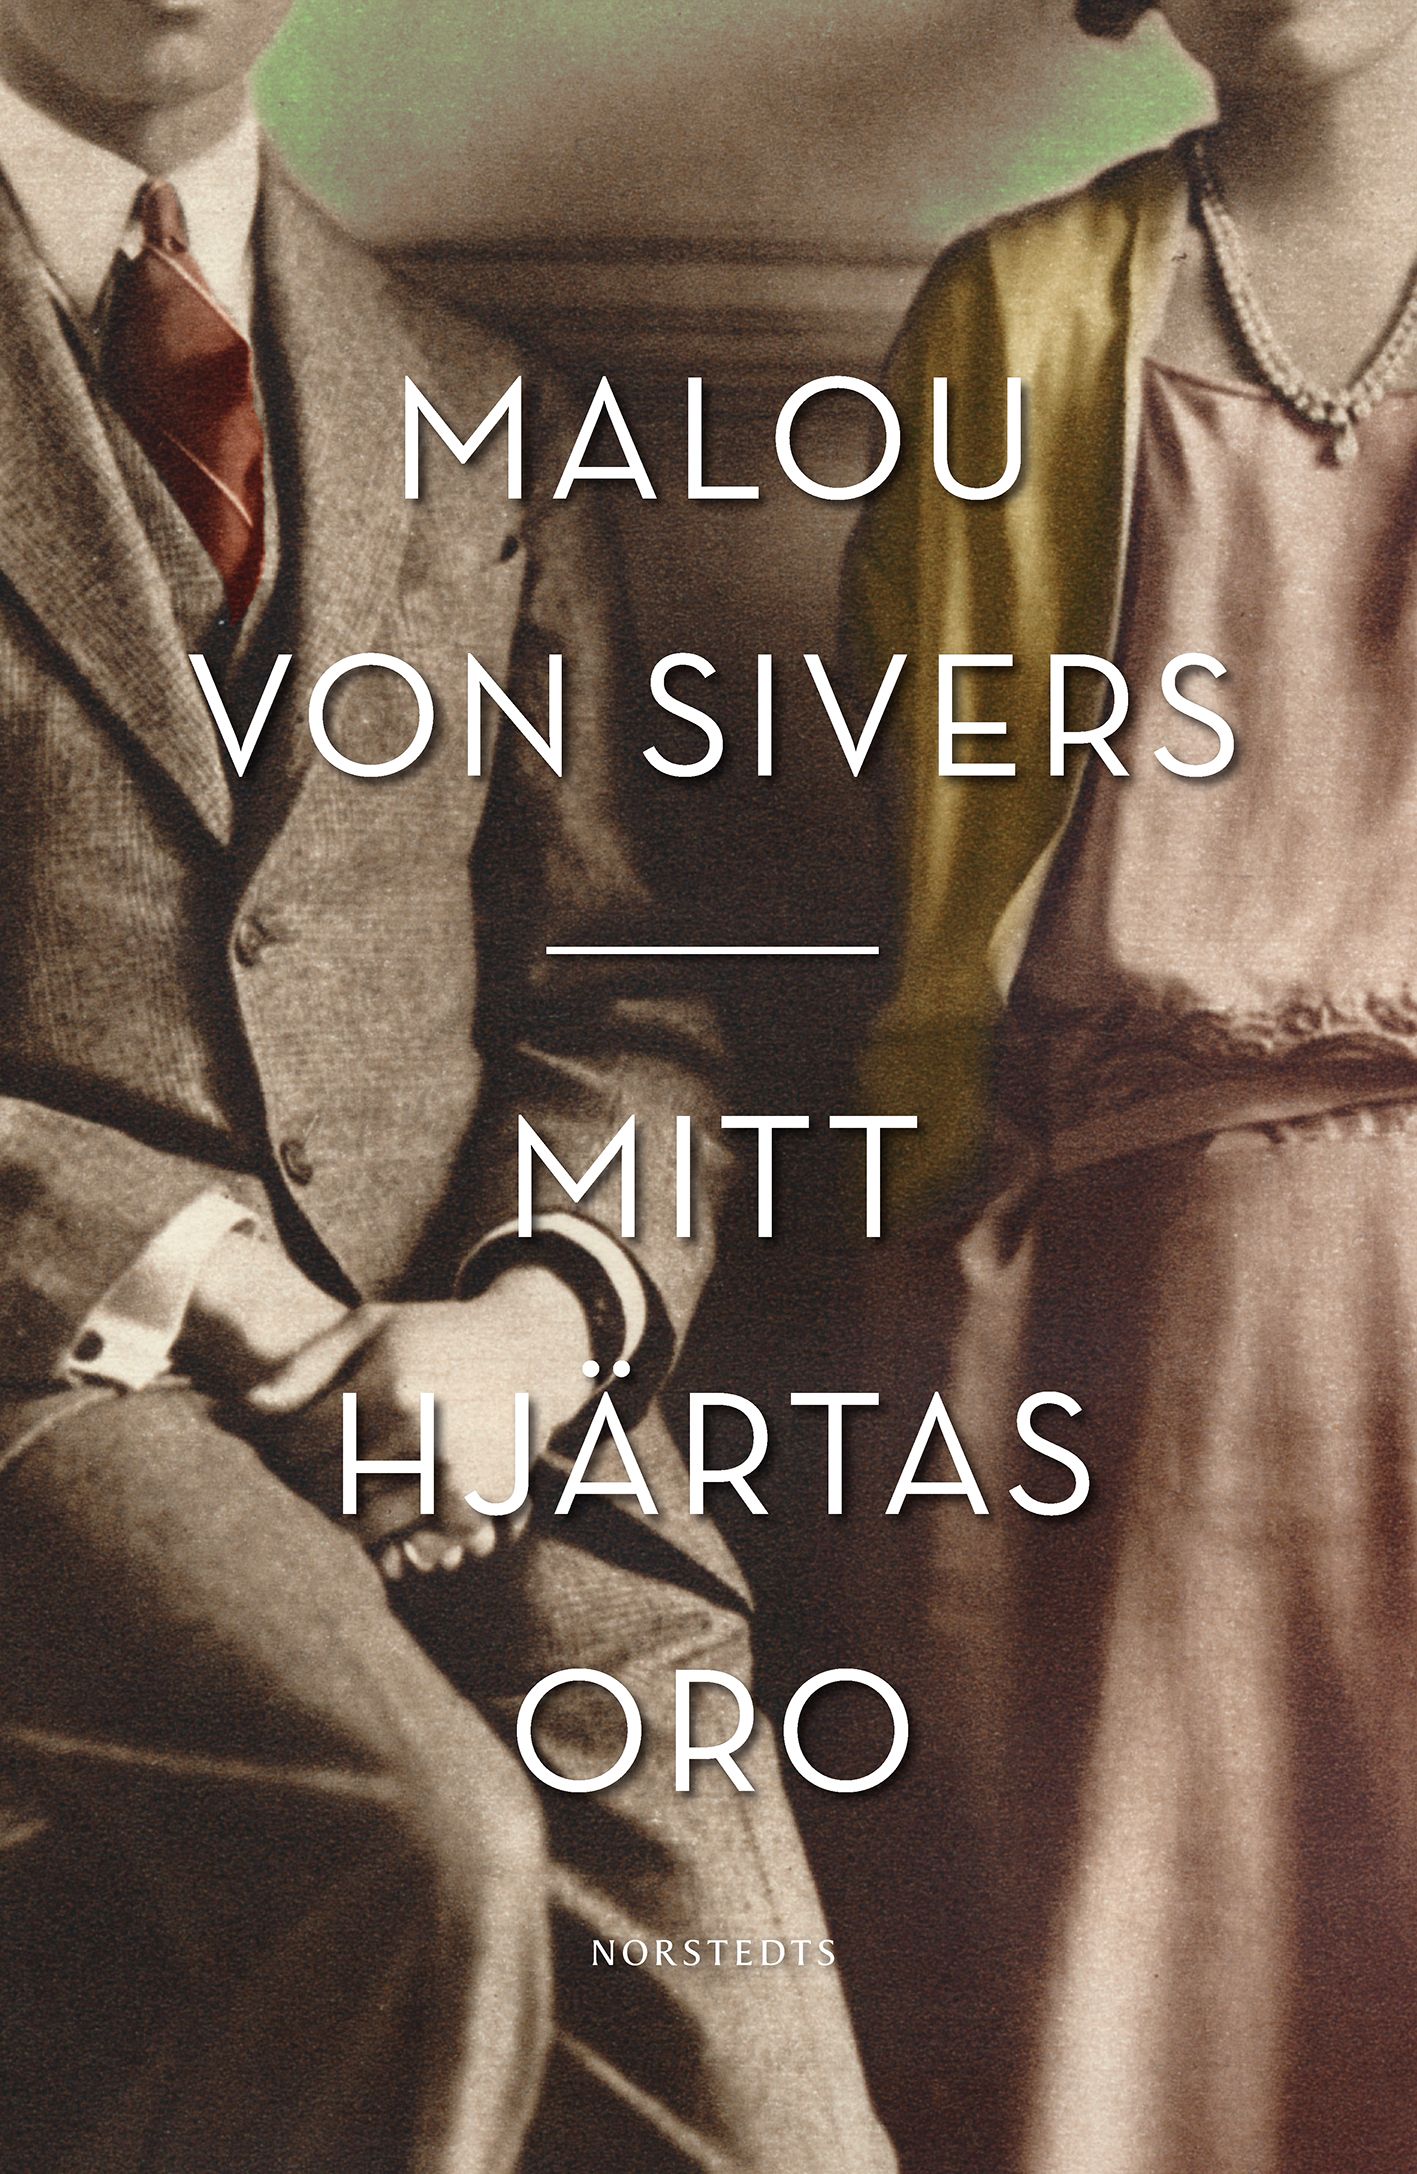 Mitt hjärtas oro, e-bog af Malou von Sivers